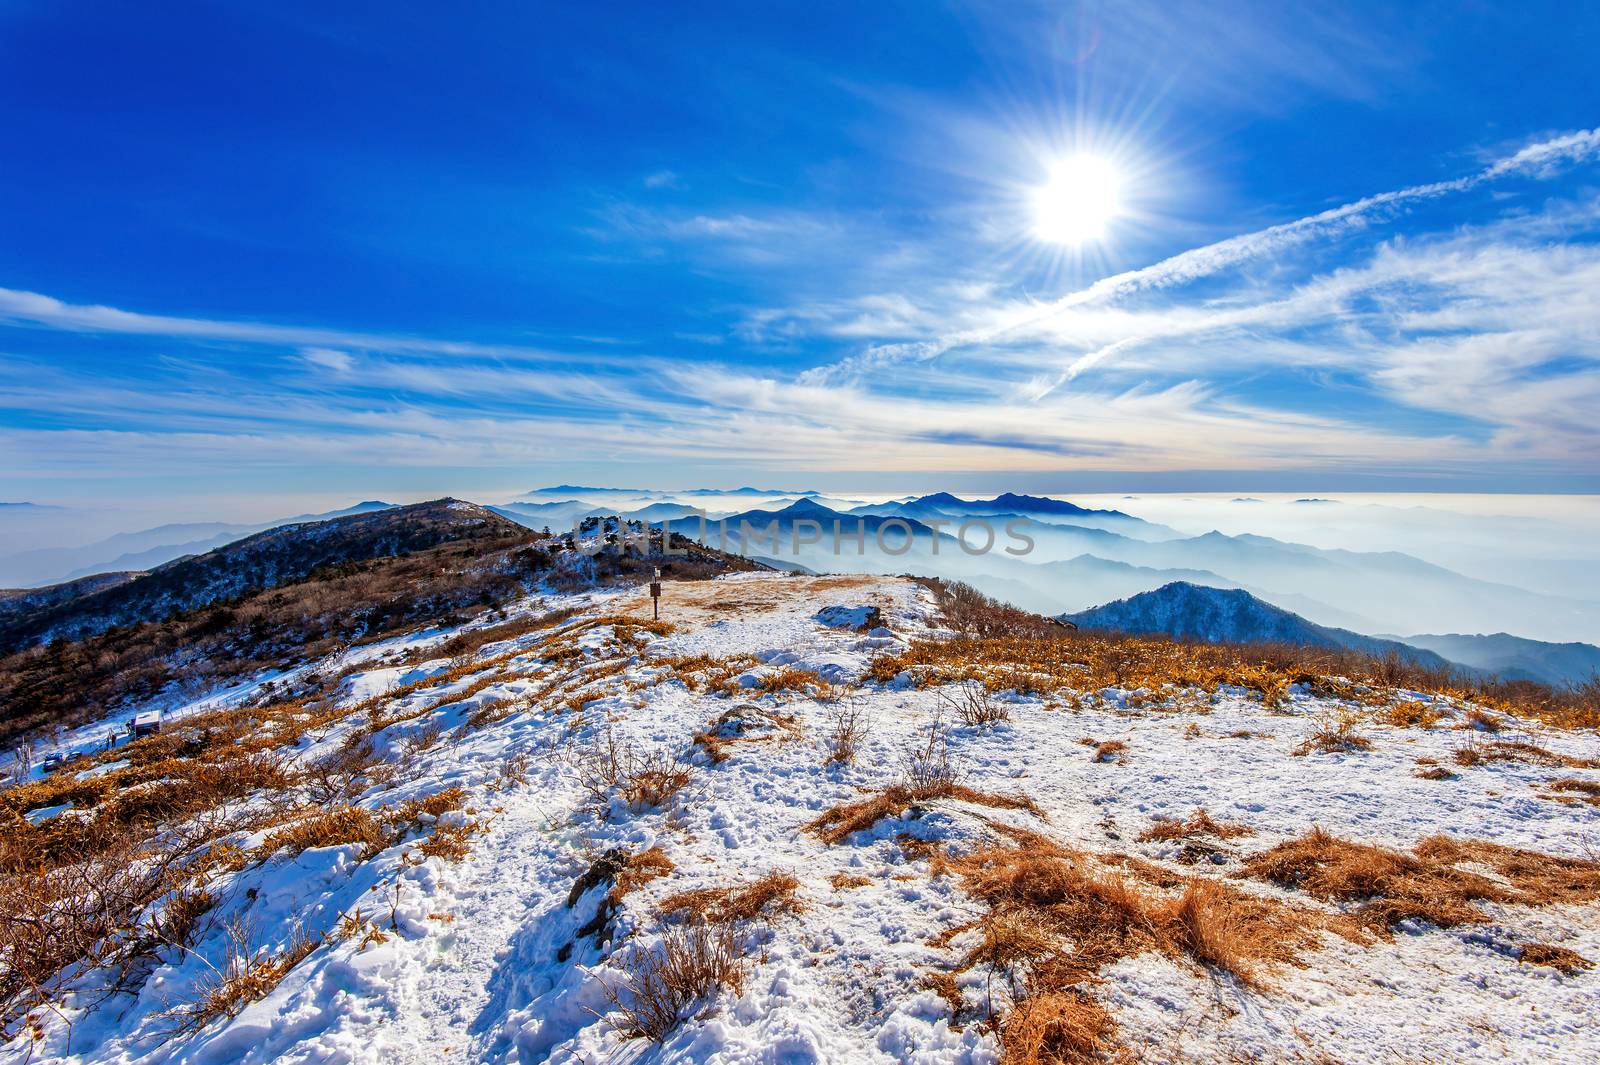 Peak of Deogyusan mountains in winter,South Korea.